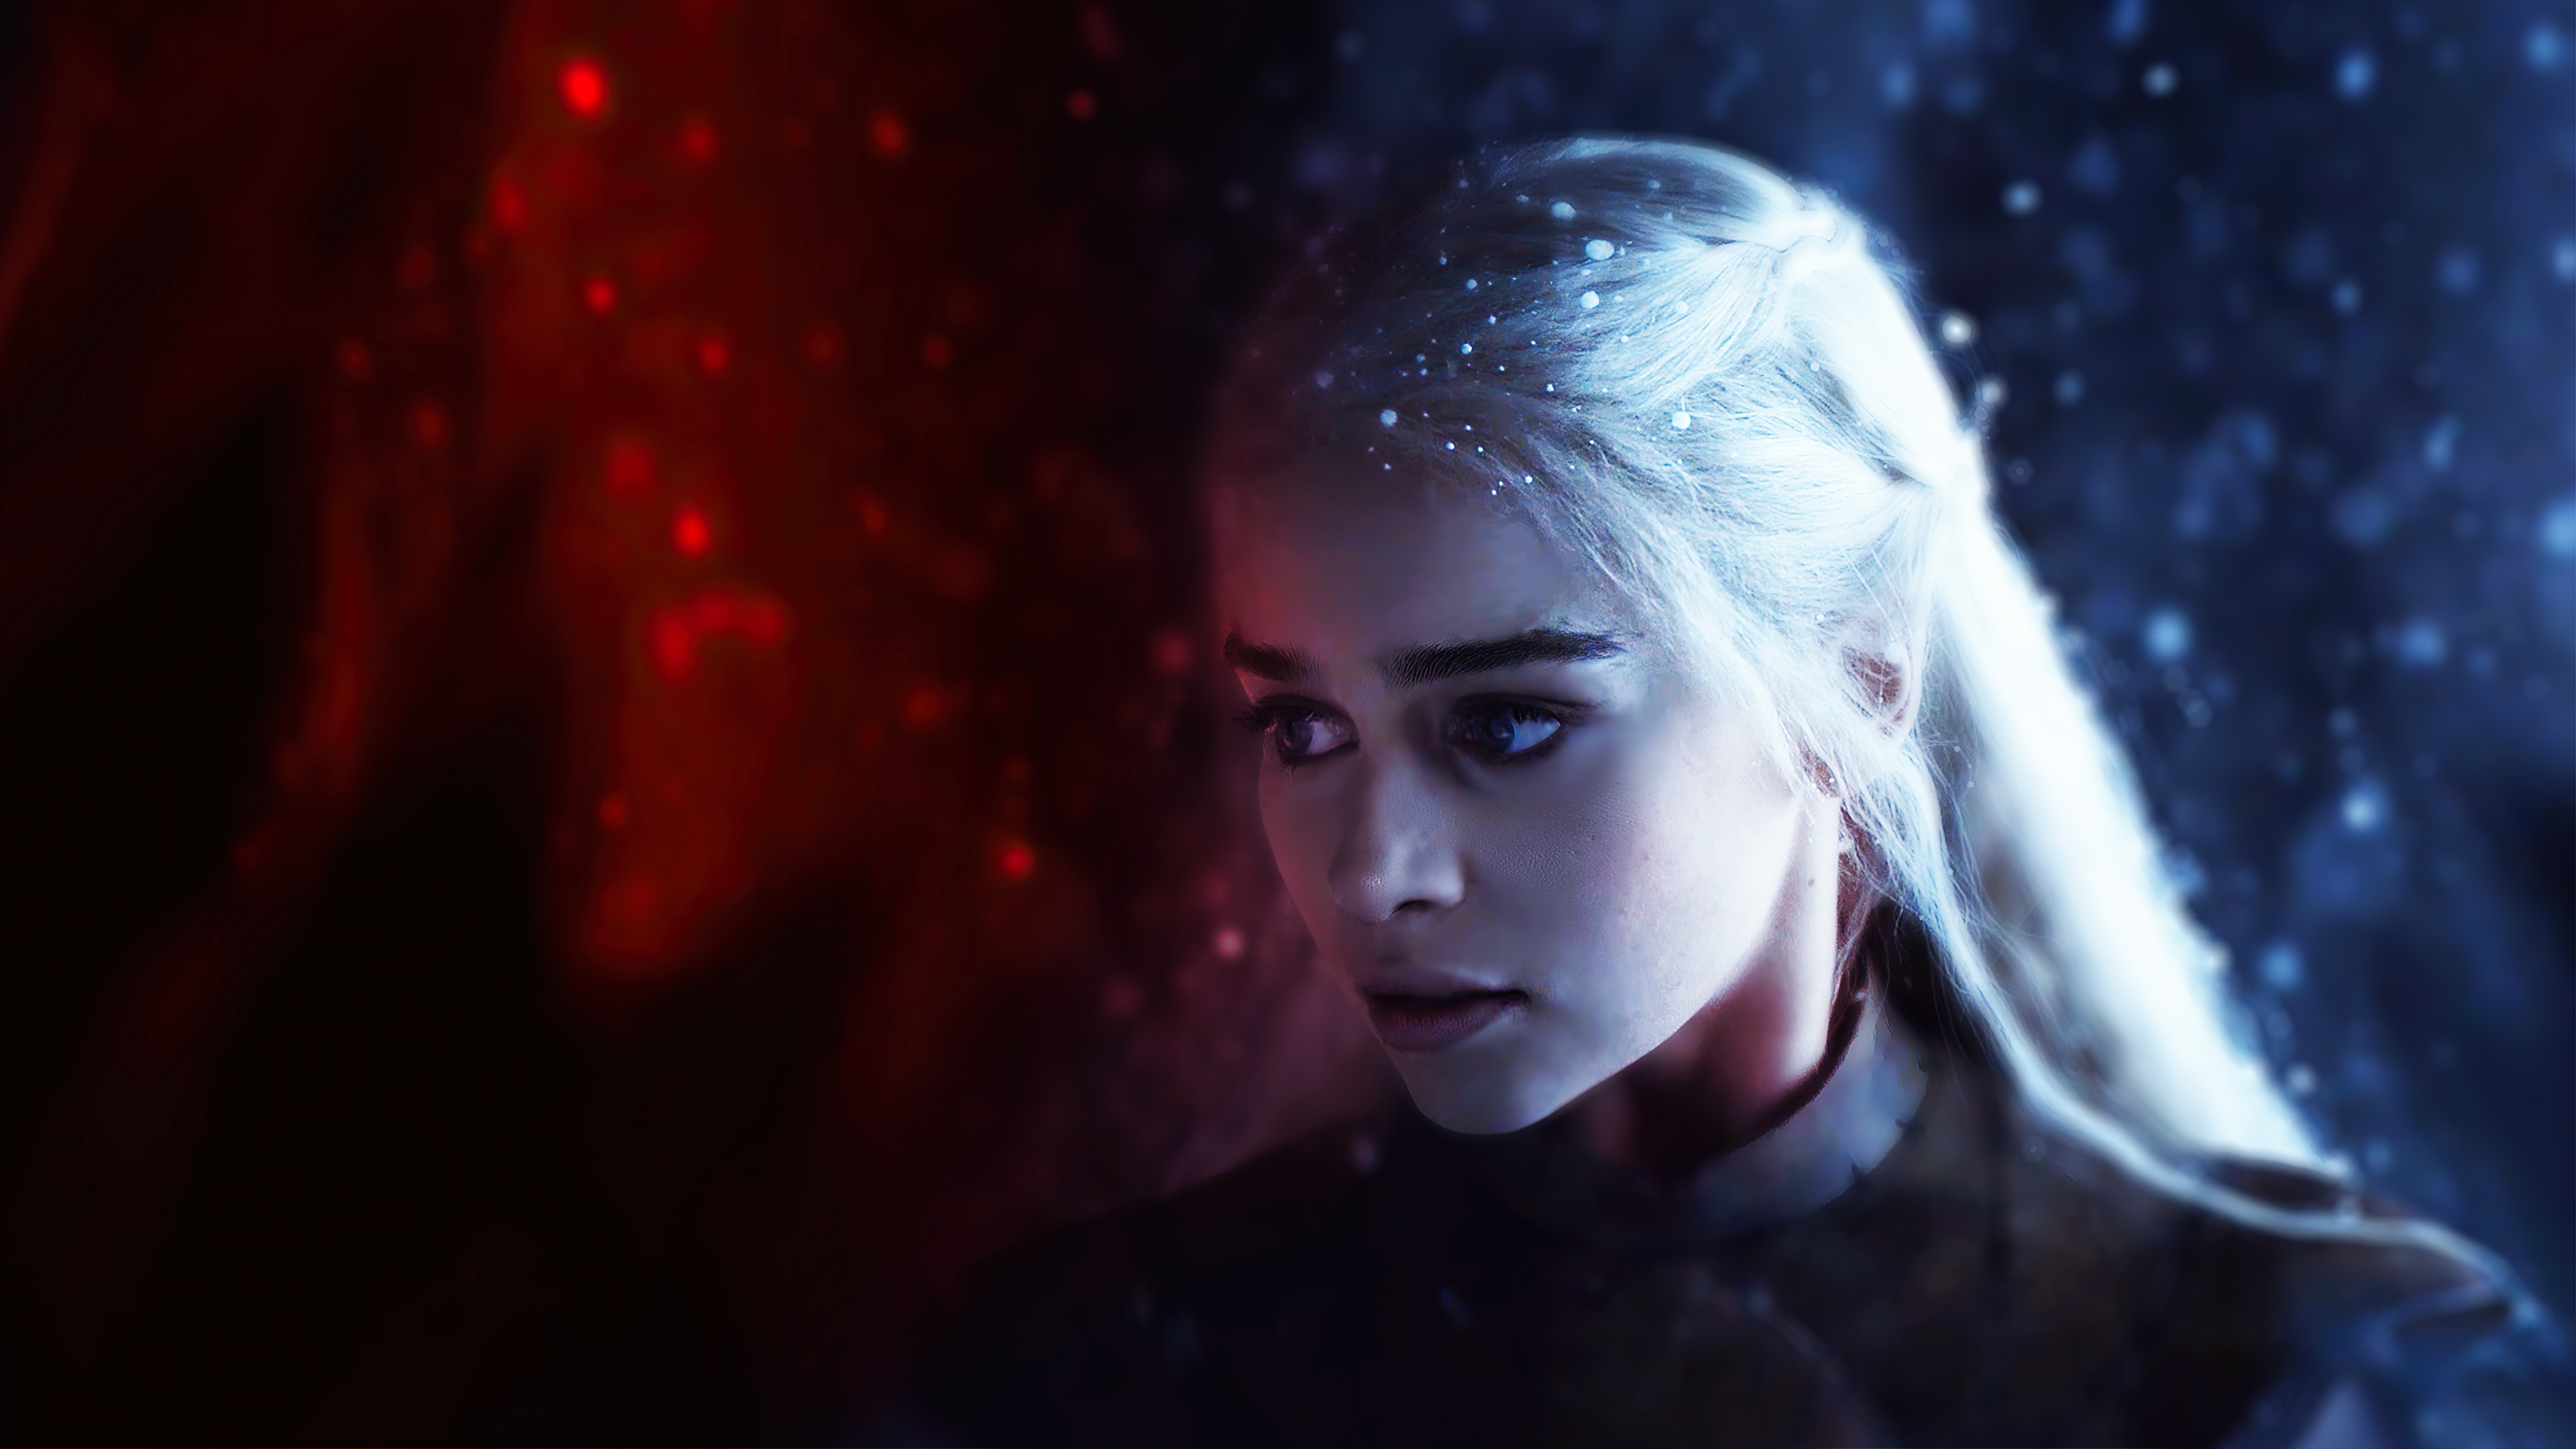 Wallpapers Daenerys Targaryen Game Of Thrones TV show on the desktop